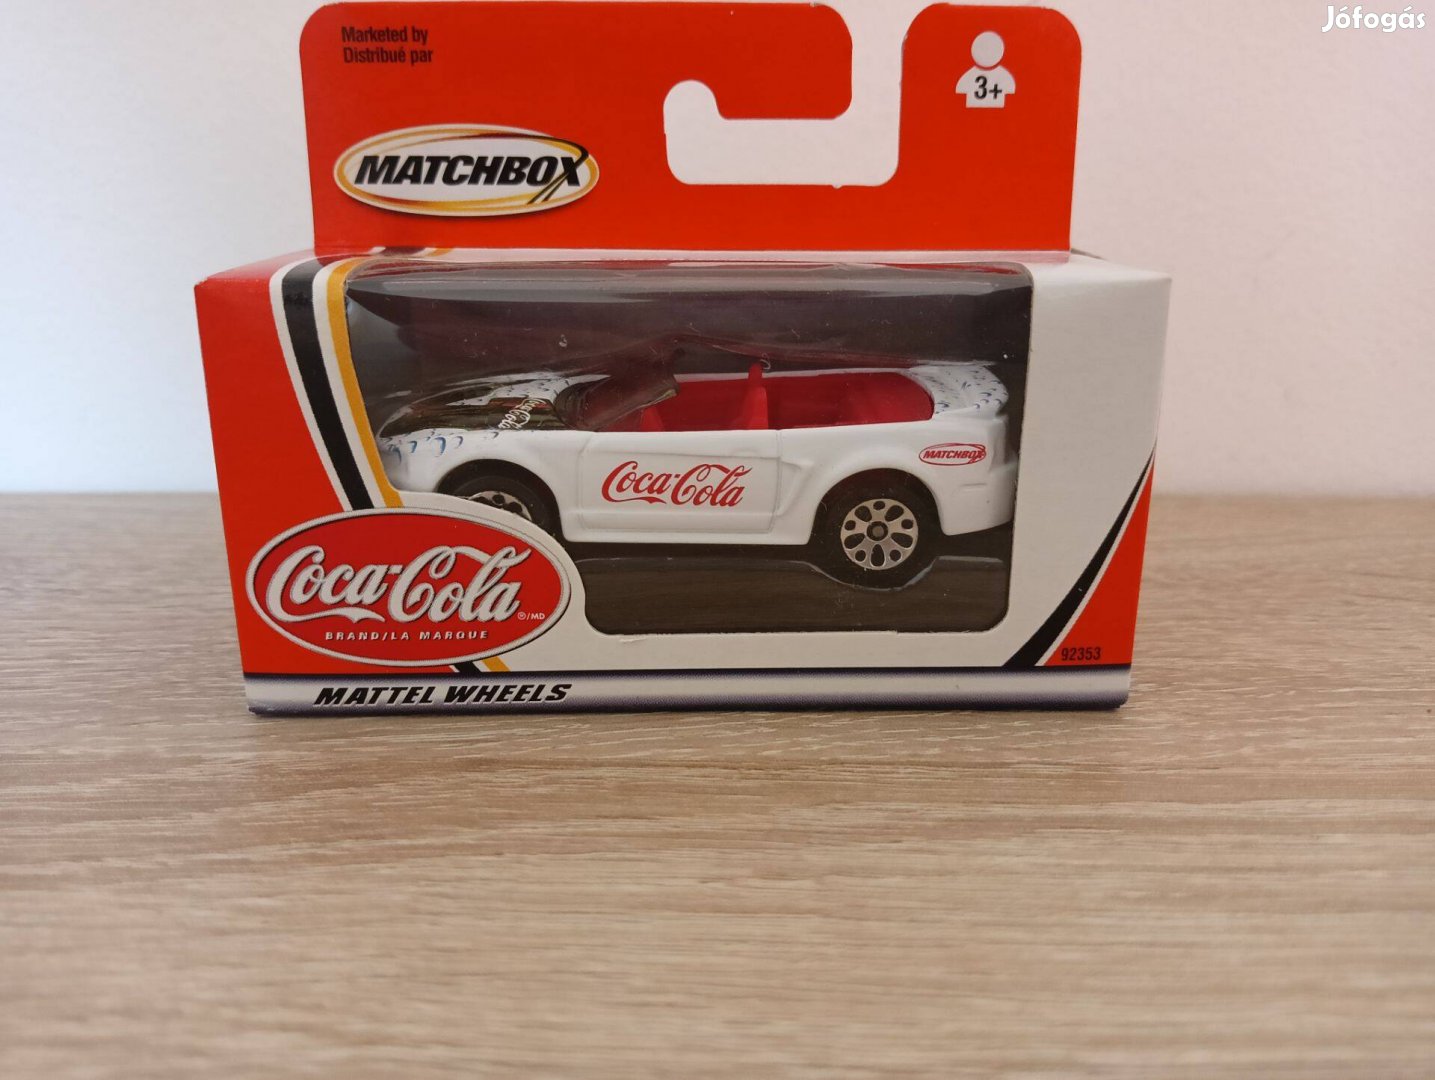 Matchbox Mattel Wheels 2002 Coca Cola Ford Mustang